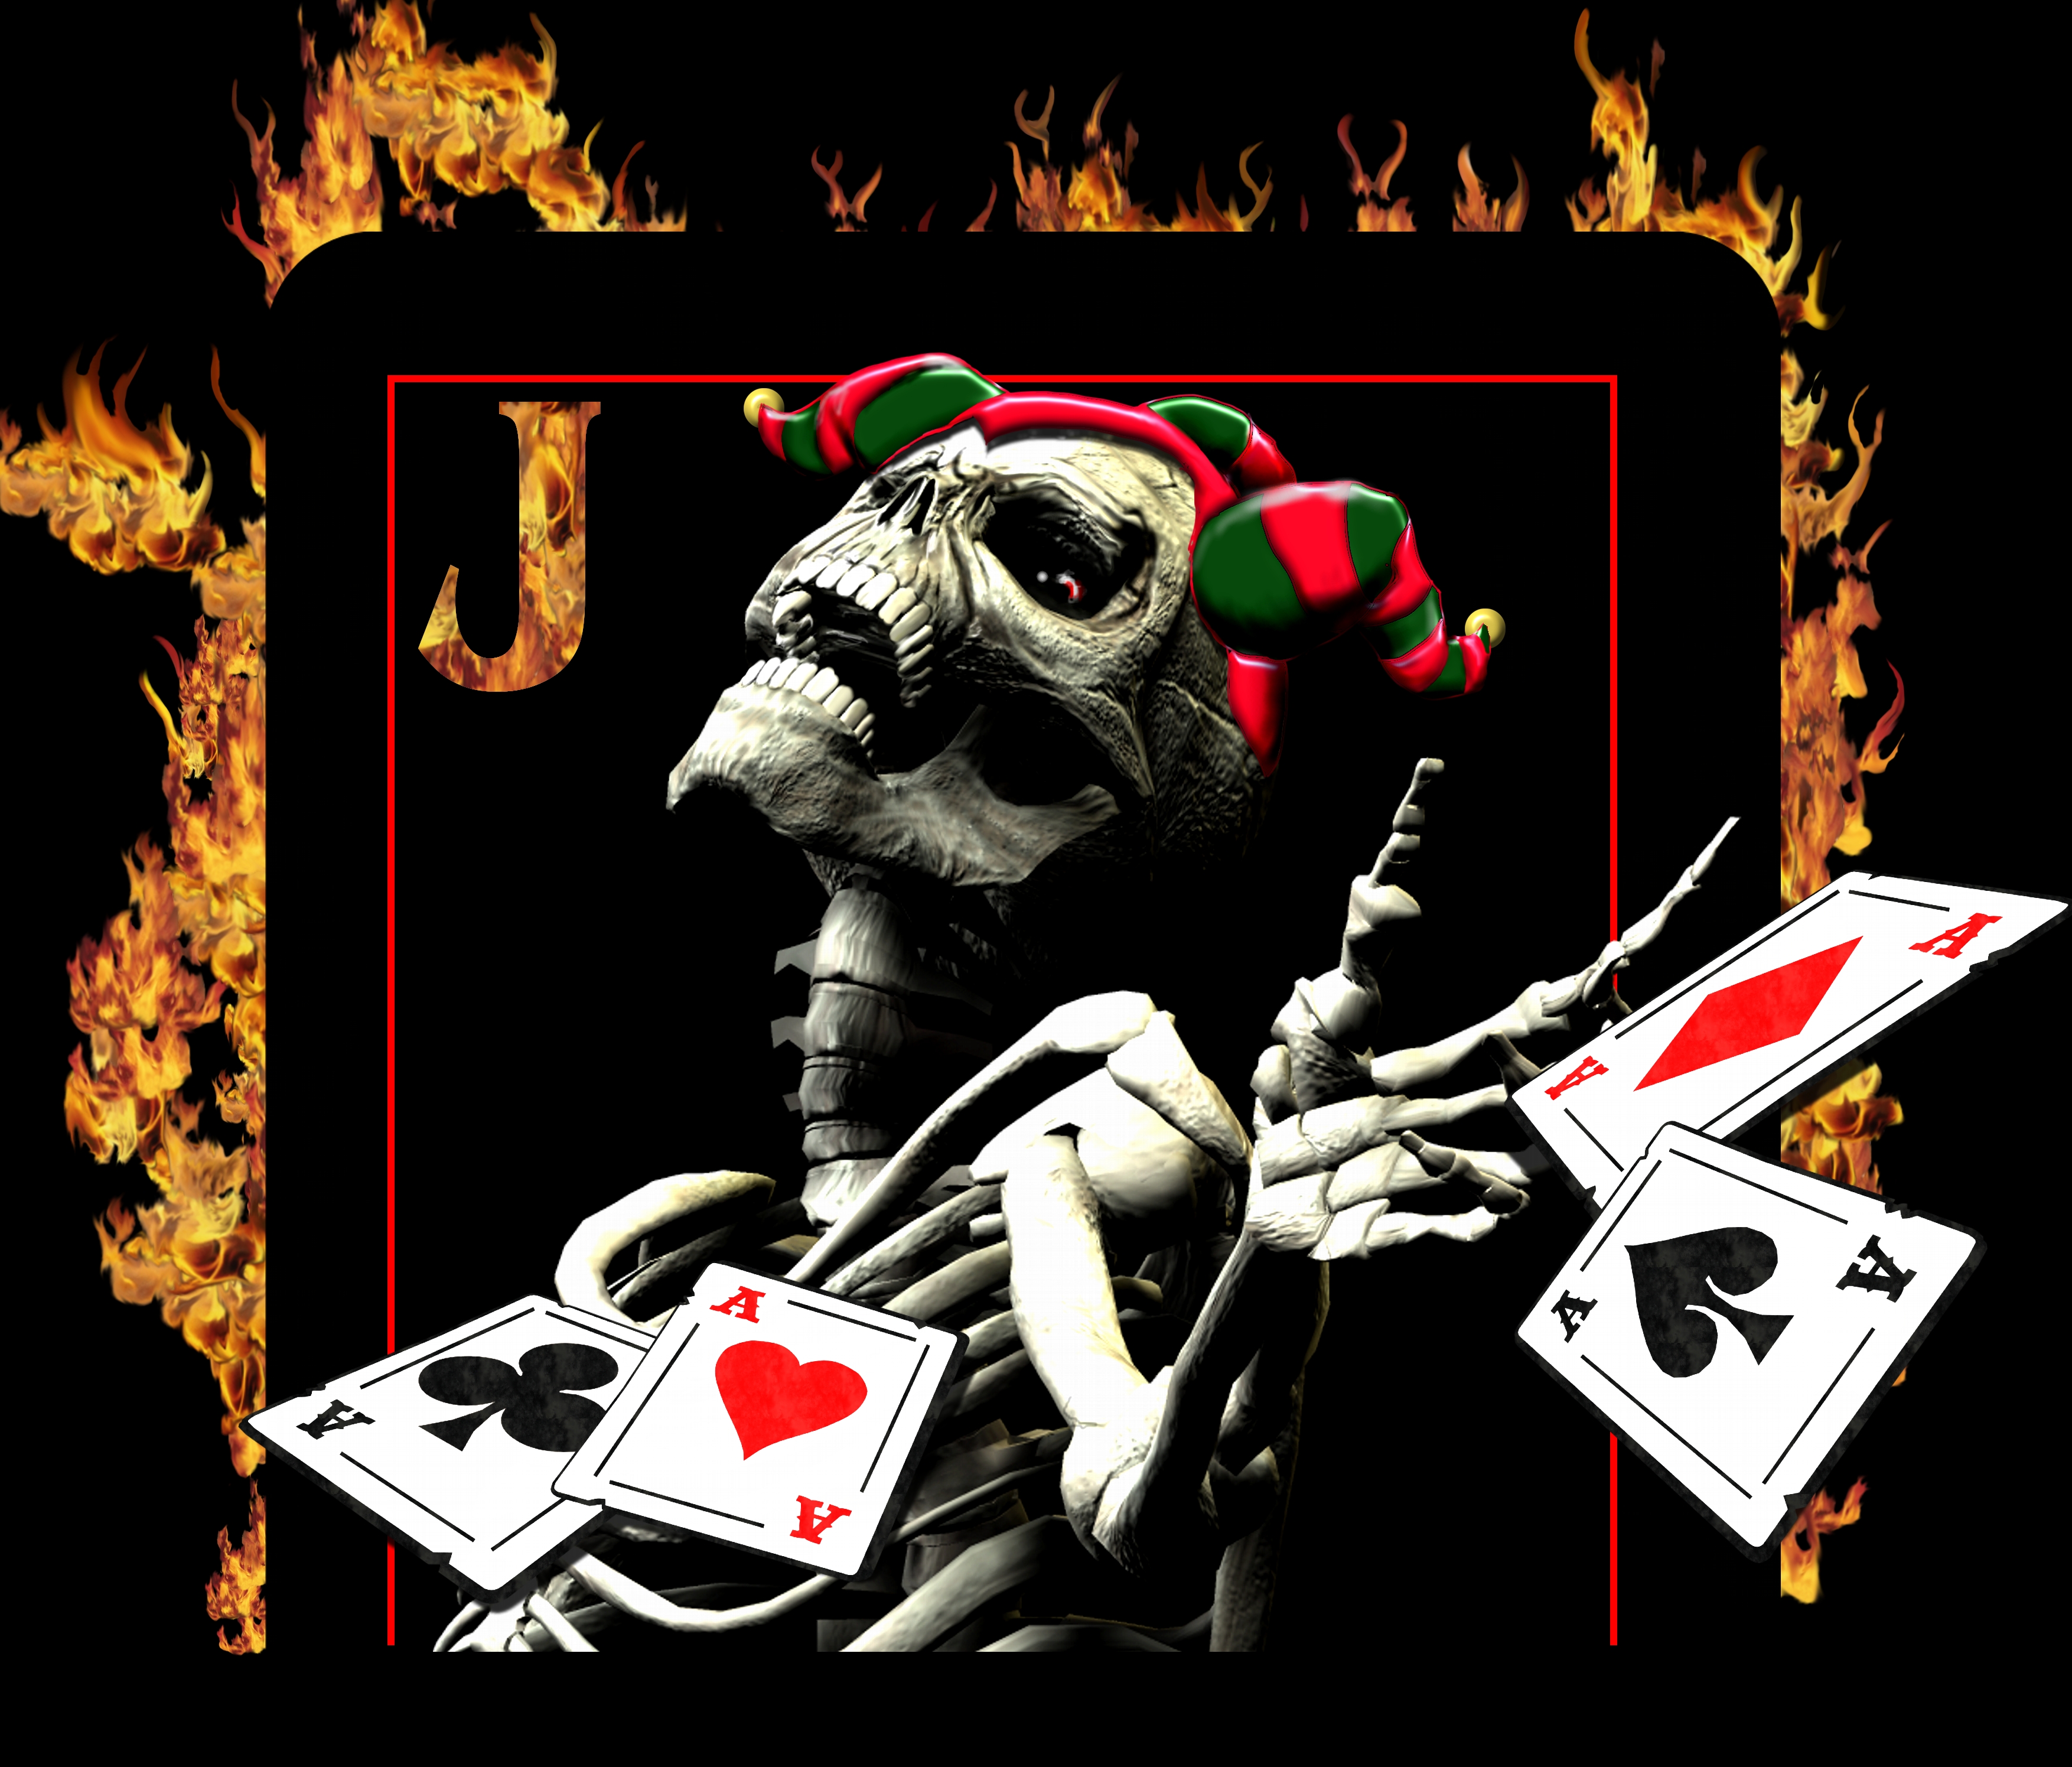 Joker Card by cgartner on DeviantArt